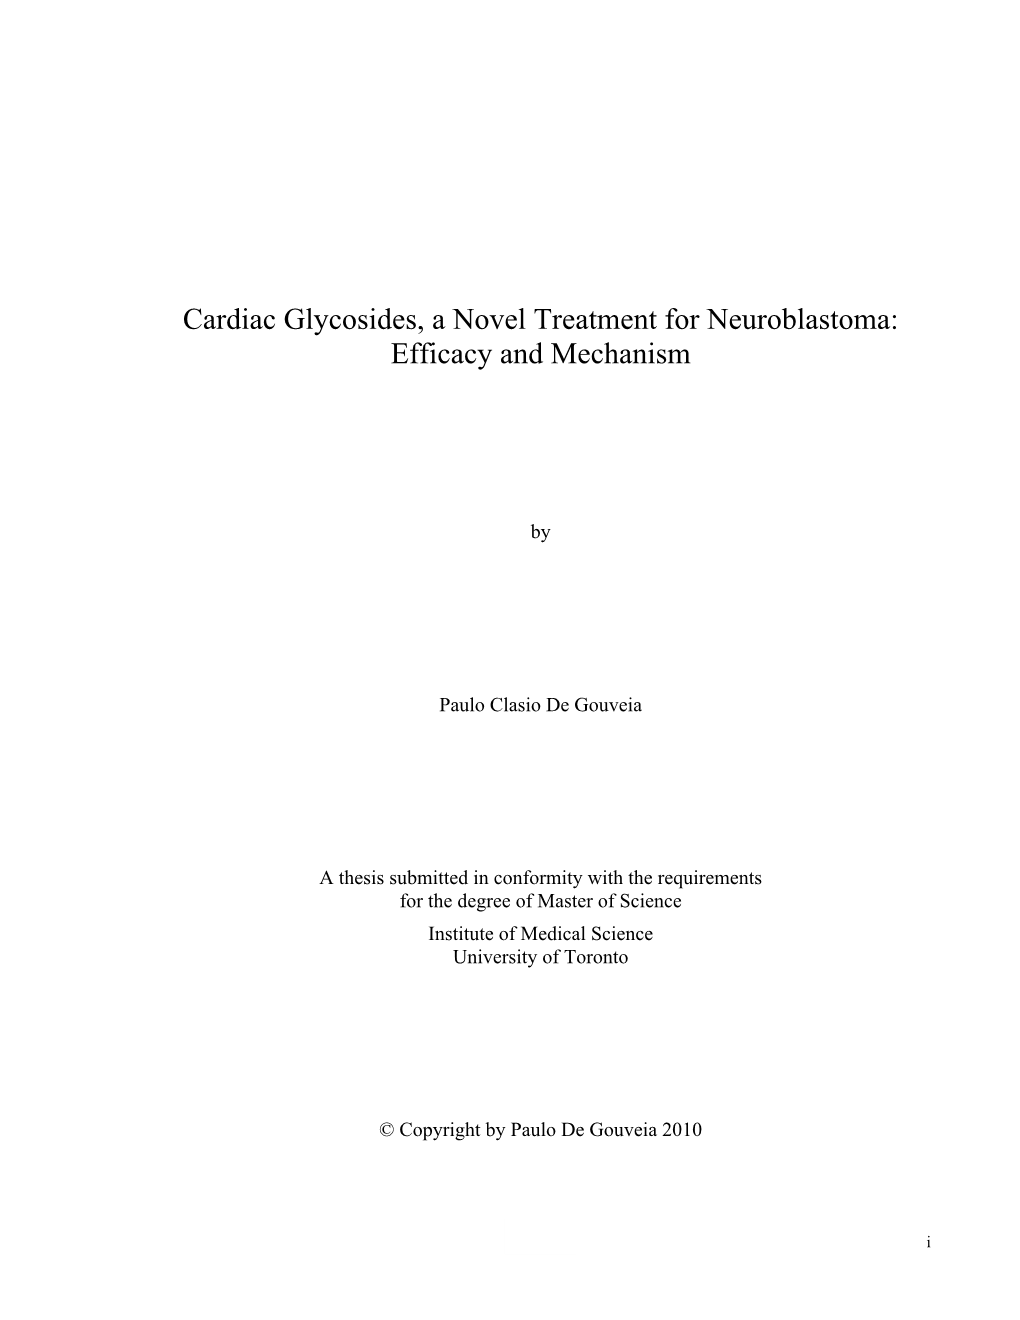 Cardiac Glycosides, a Novel Treatment for Neuroblastoma: Efficacy and Mechanism